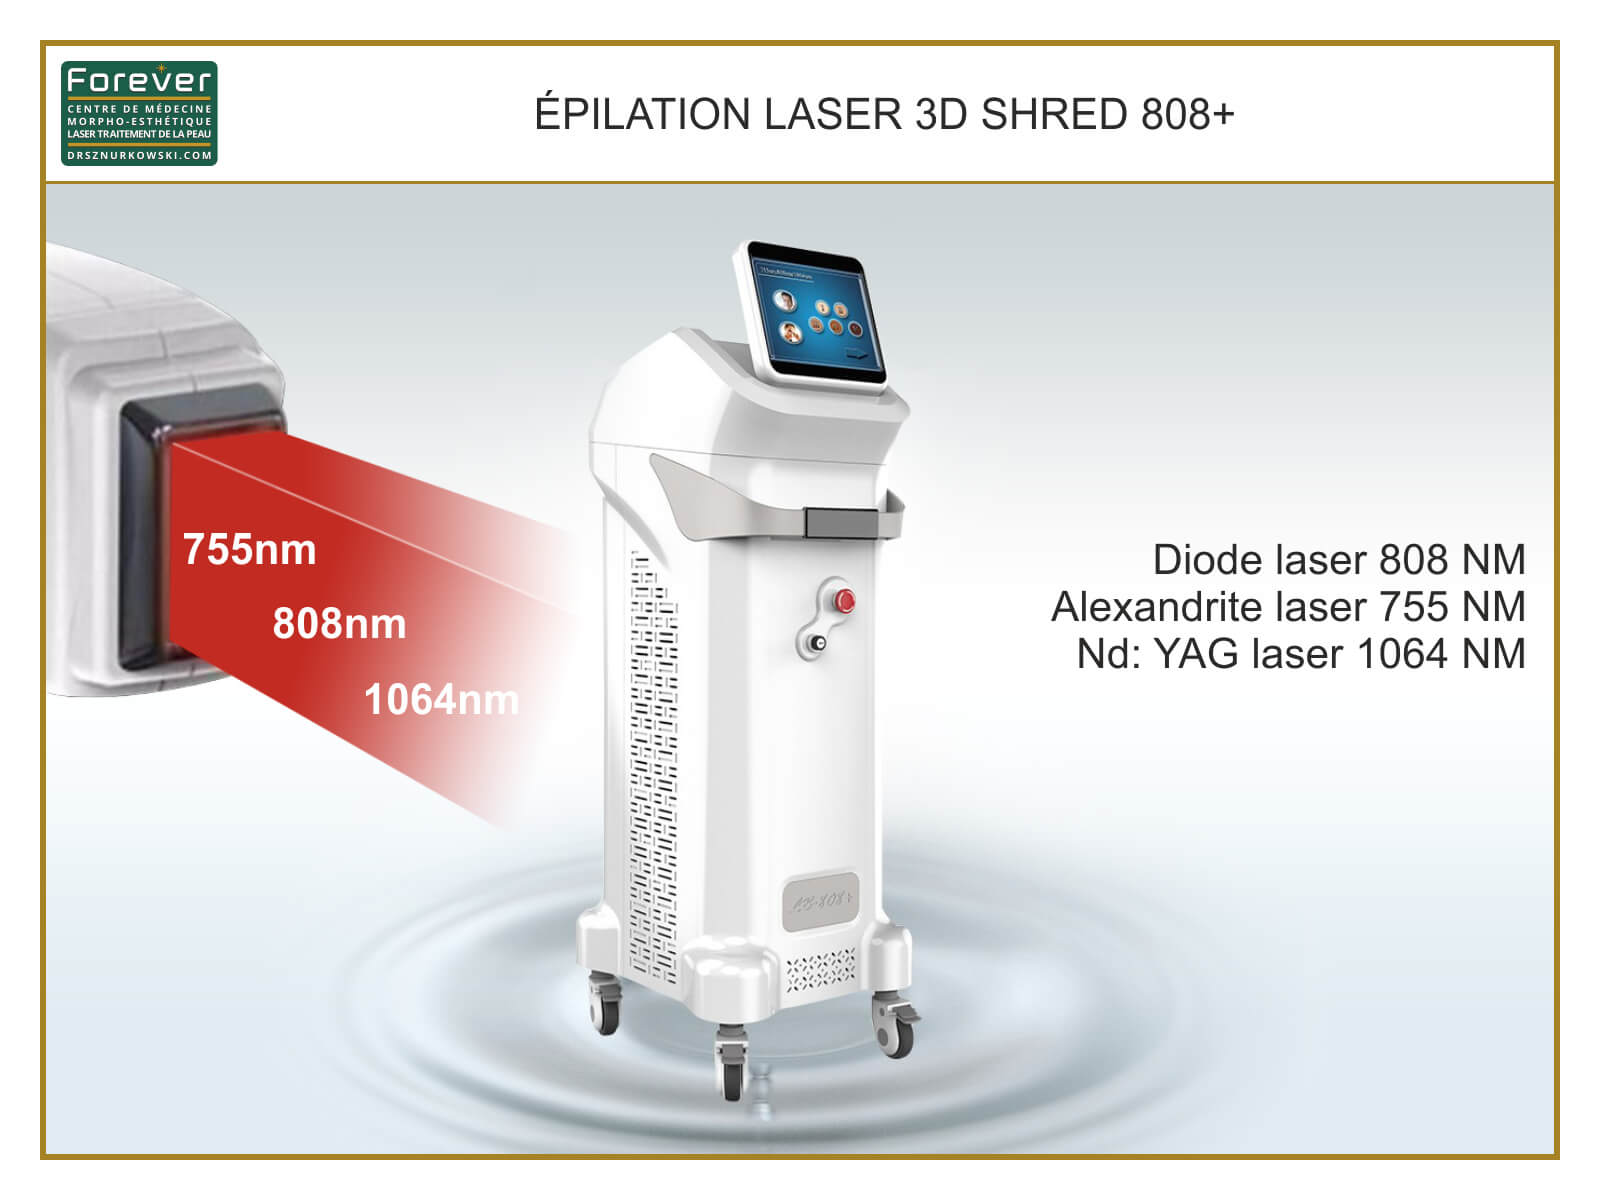 Epilation Laser 3D SHRED 808+ (80x60) FR.jpg